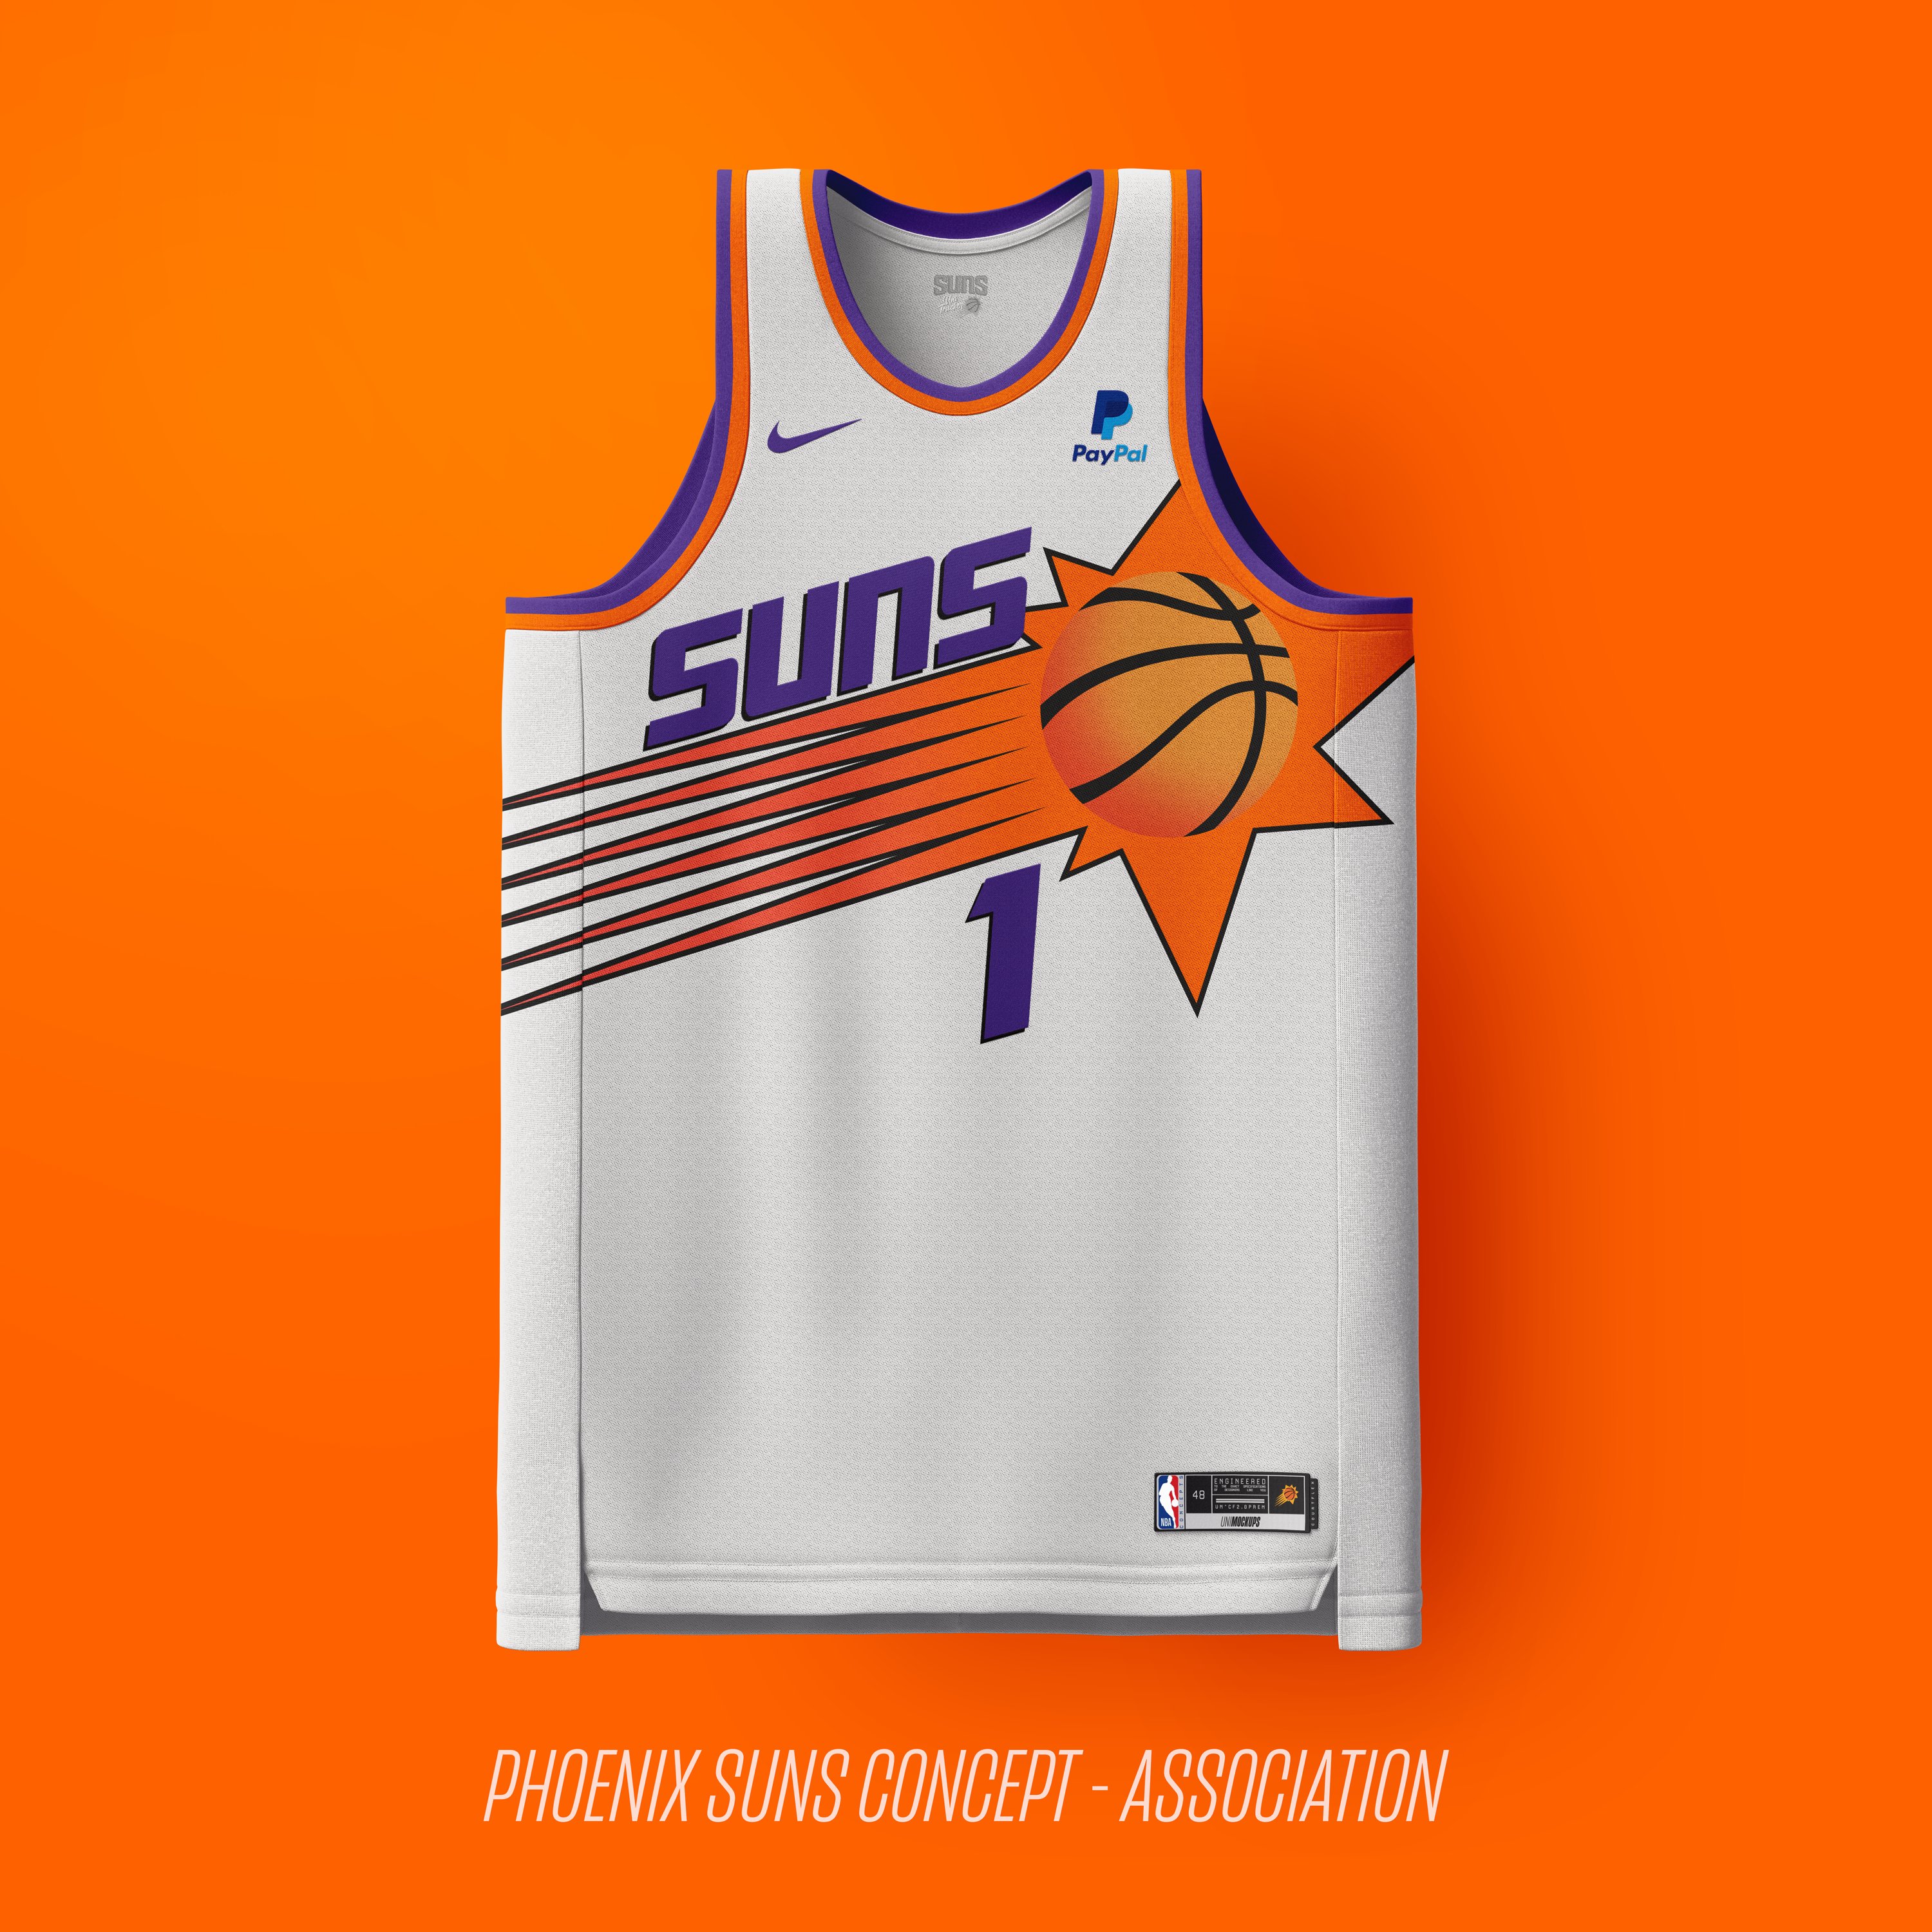 Suns Uniform Tracker on X: Ayo @Suns I know you're having trouble